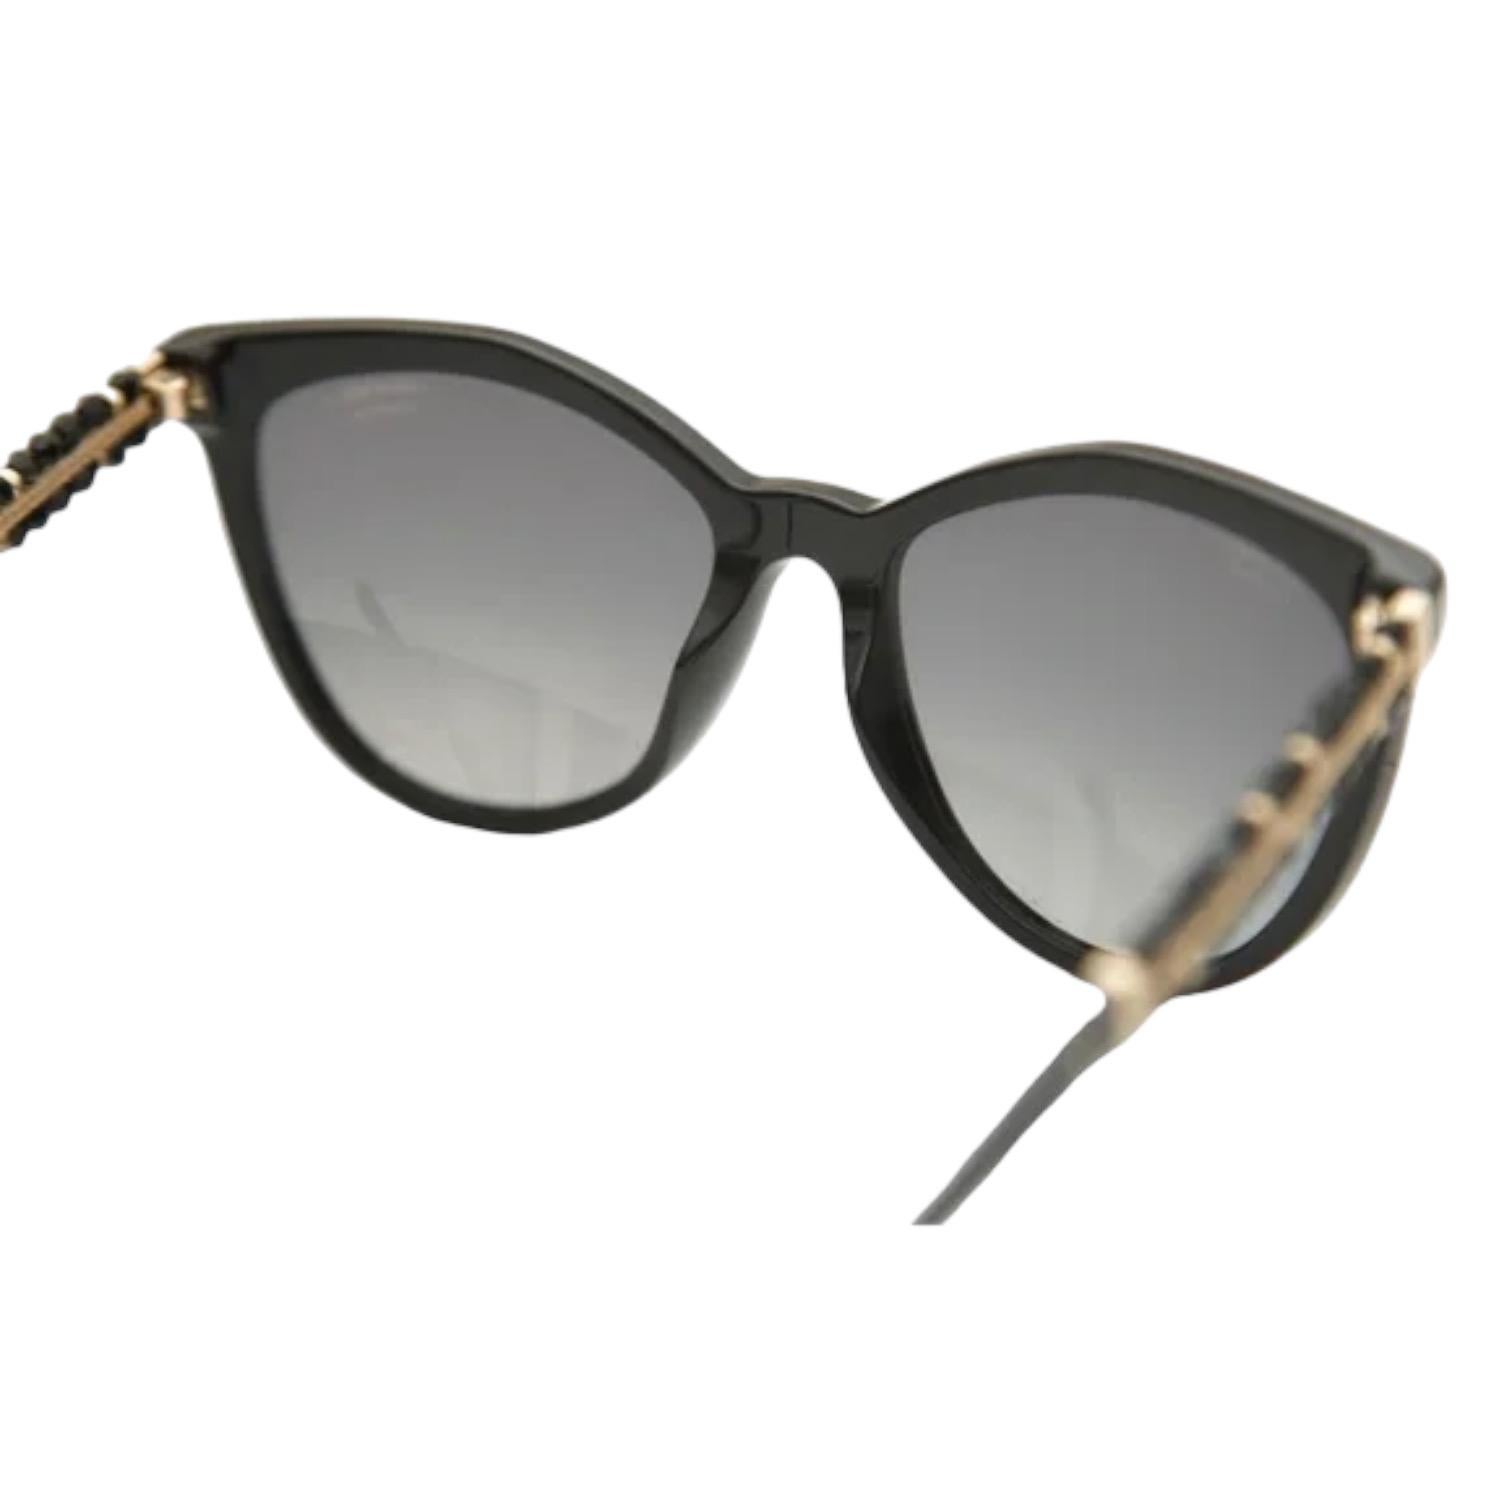 Chanel Black Sunglasses Polarized Grey Lens Beads Gold HW 5376B-A c501-S8 1